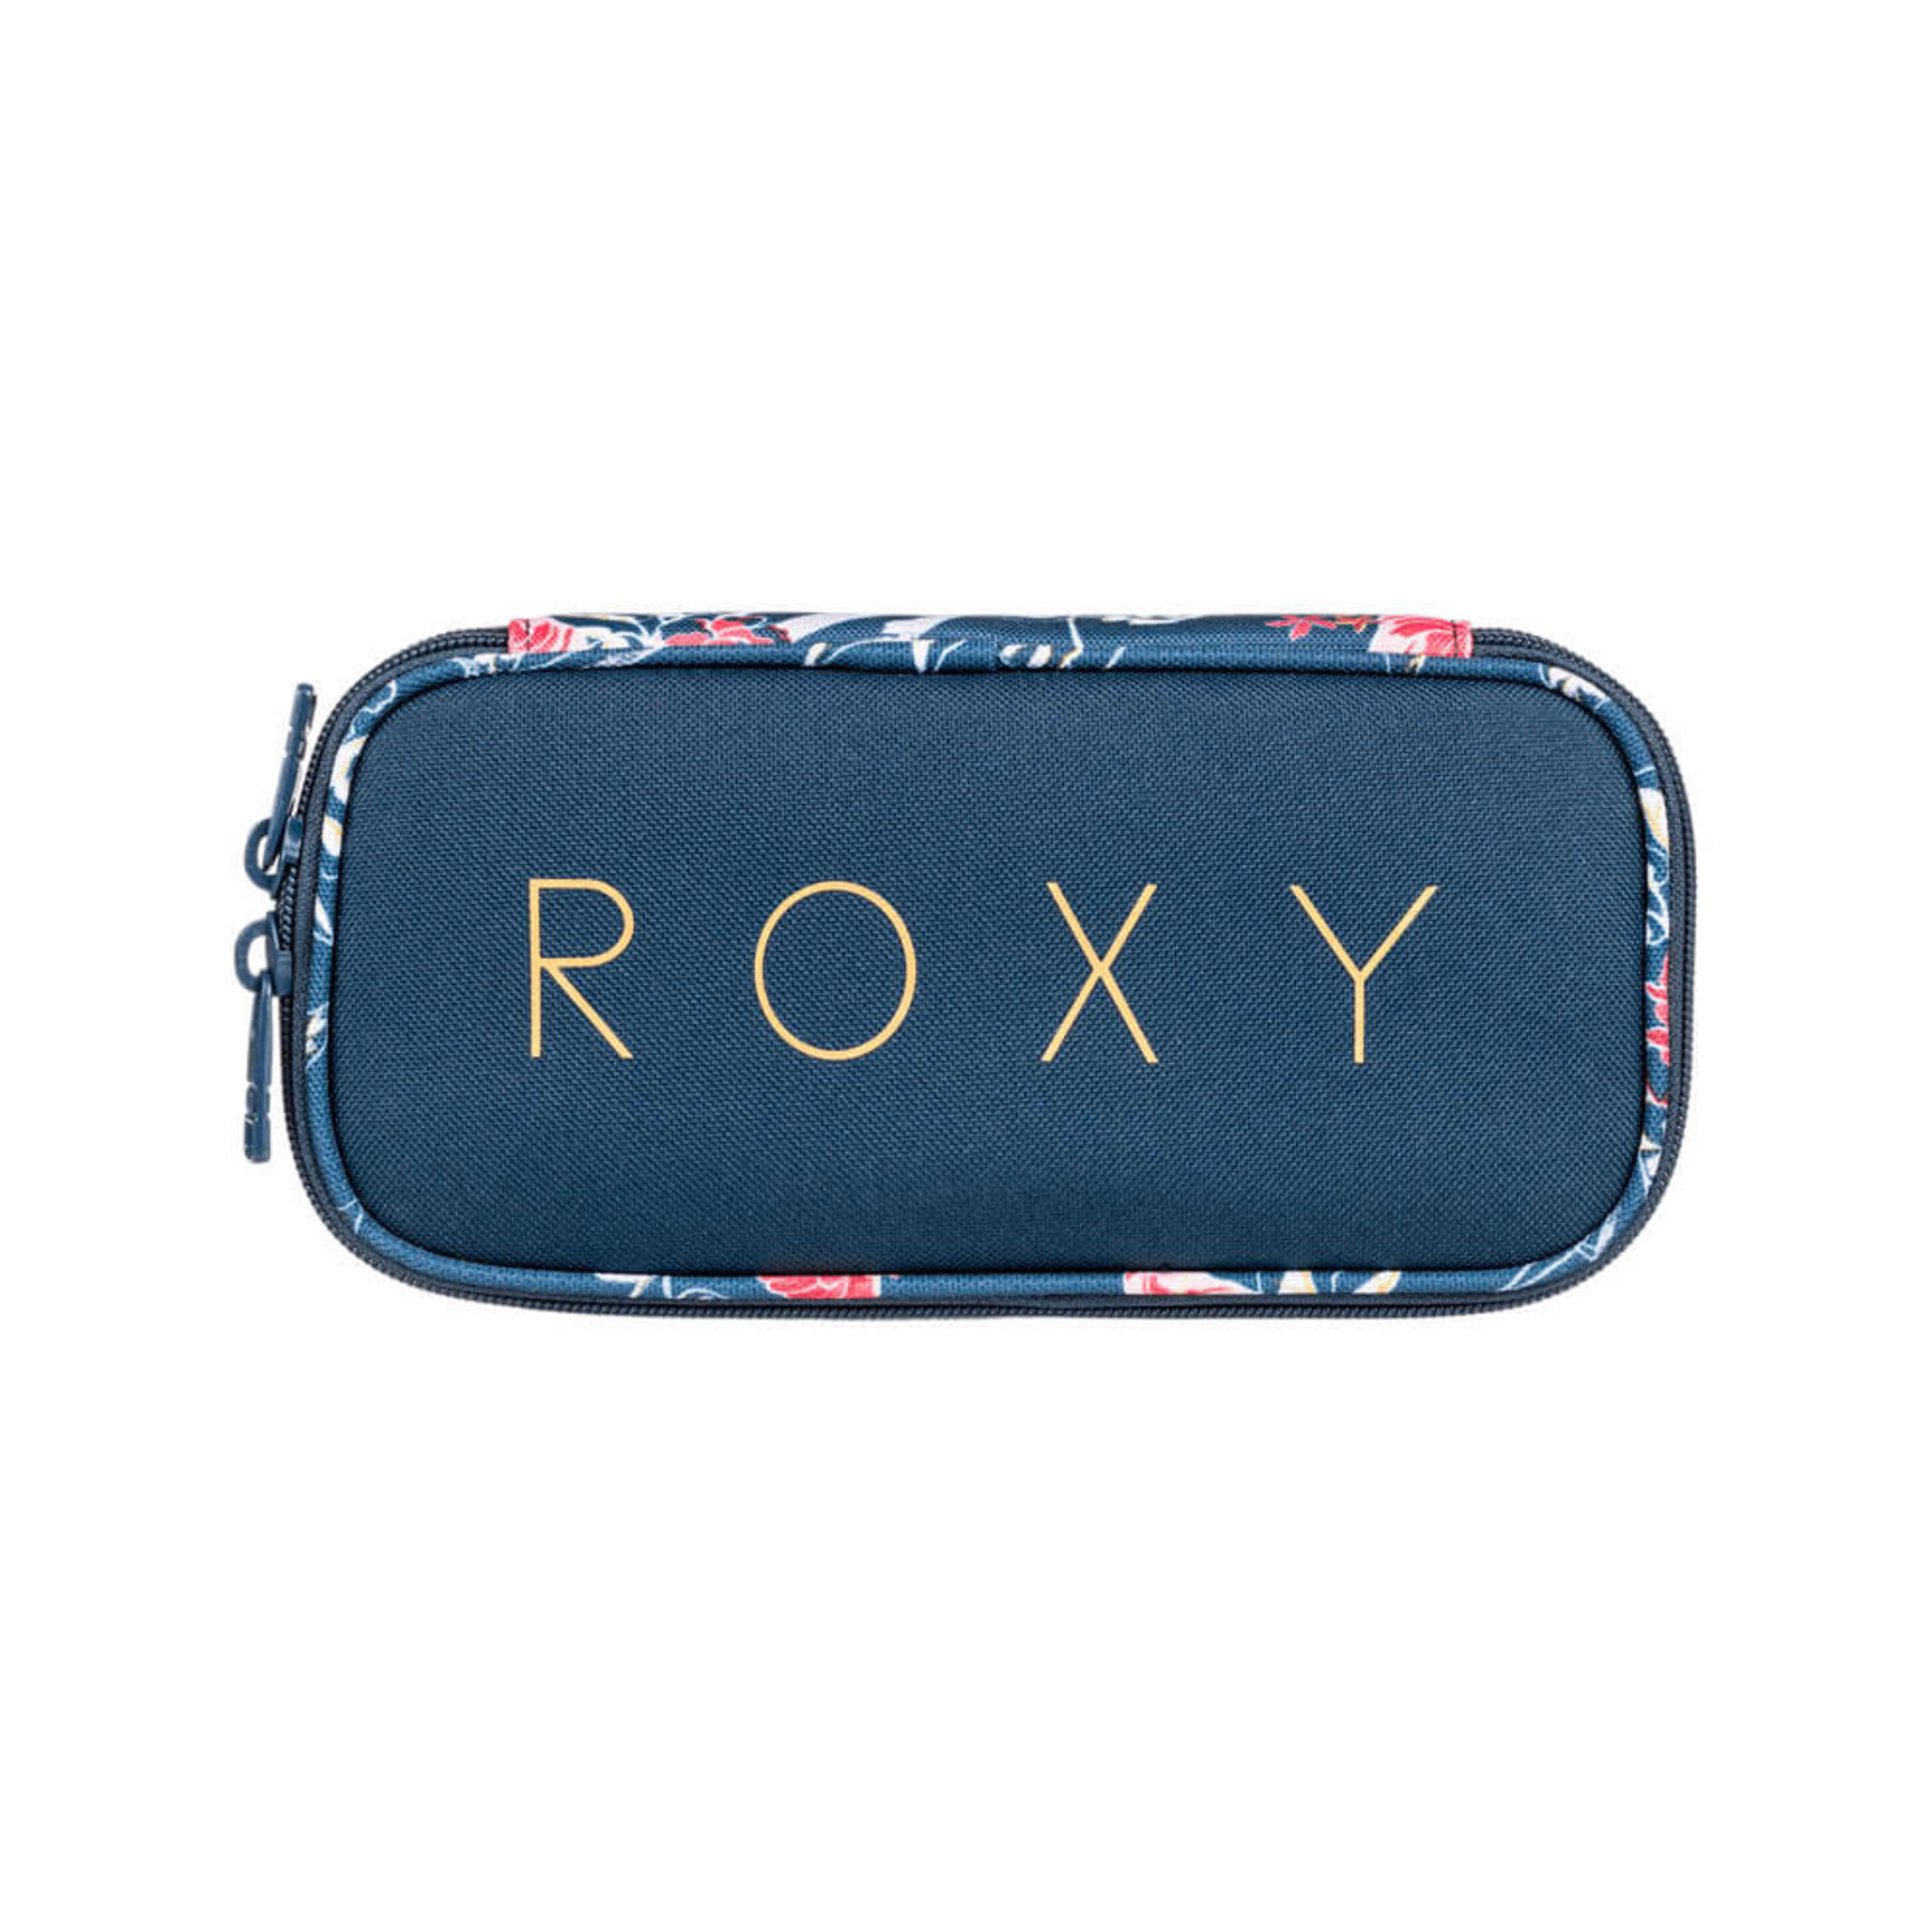 Roxy Travel Accessory- Money Belt, Blue - multicolor - 